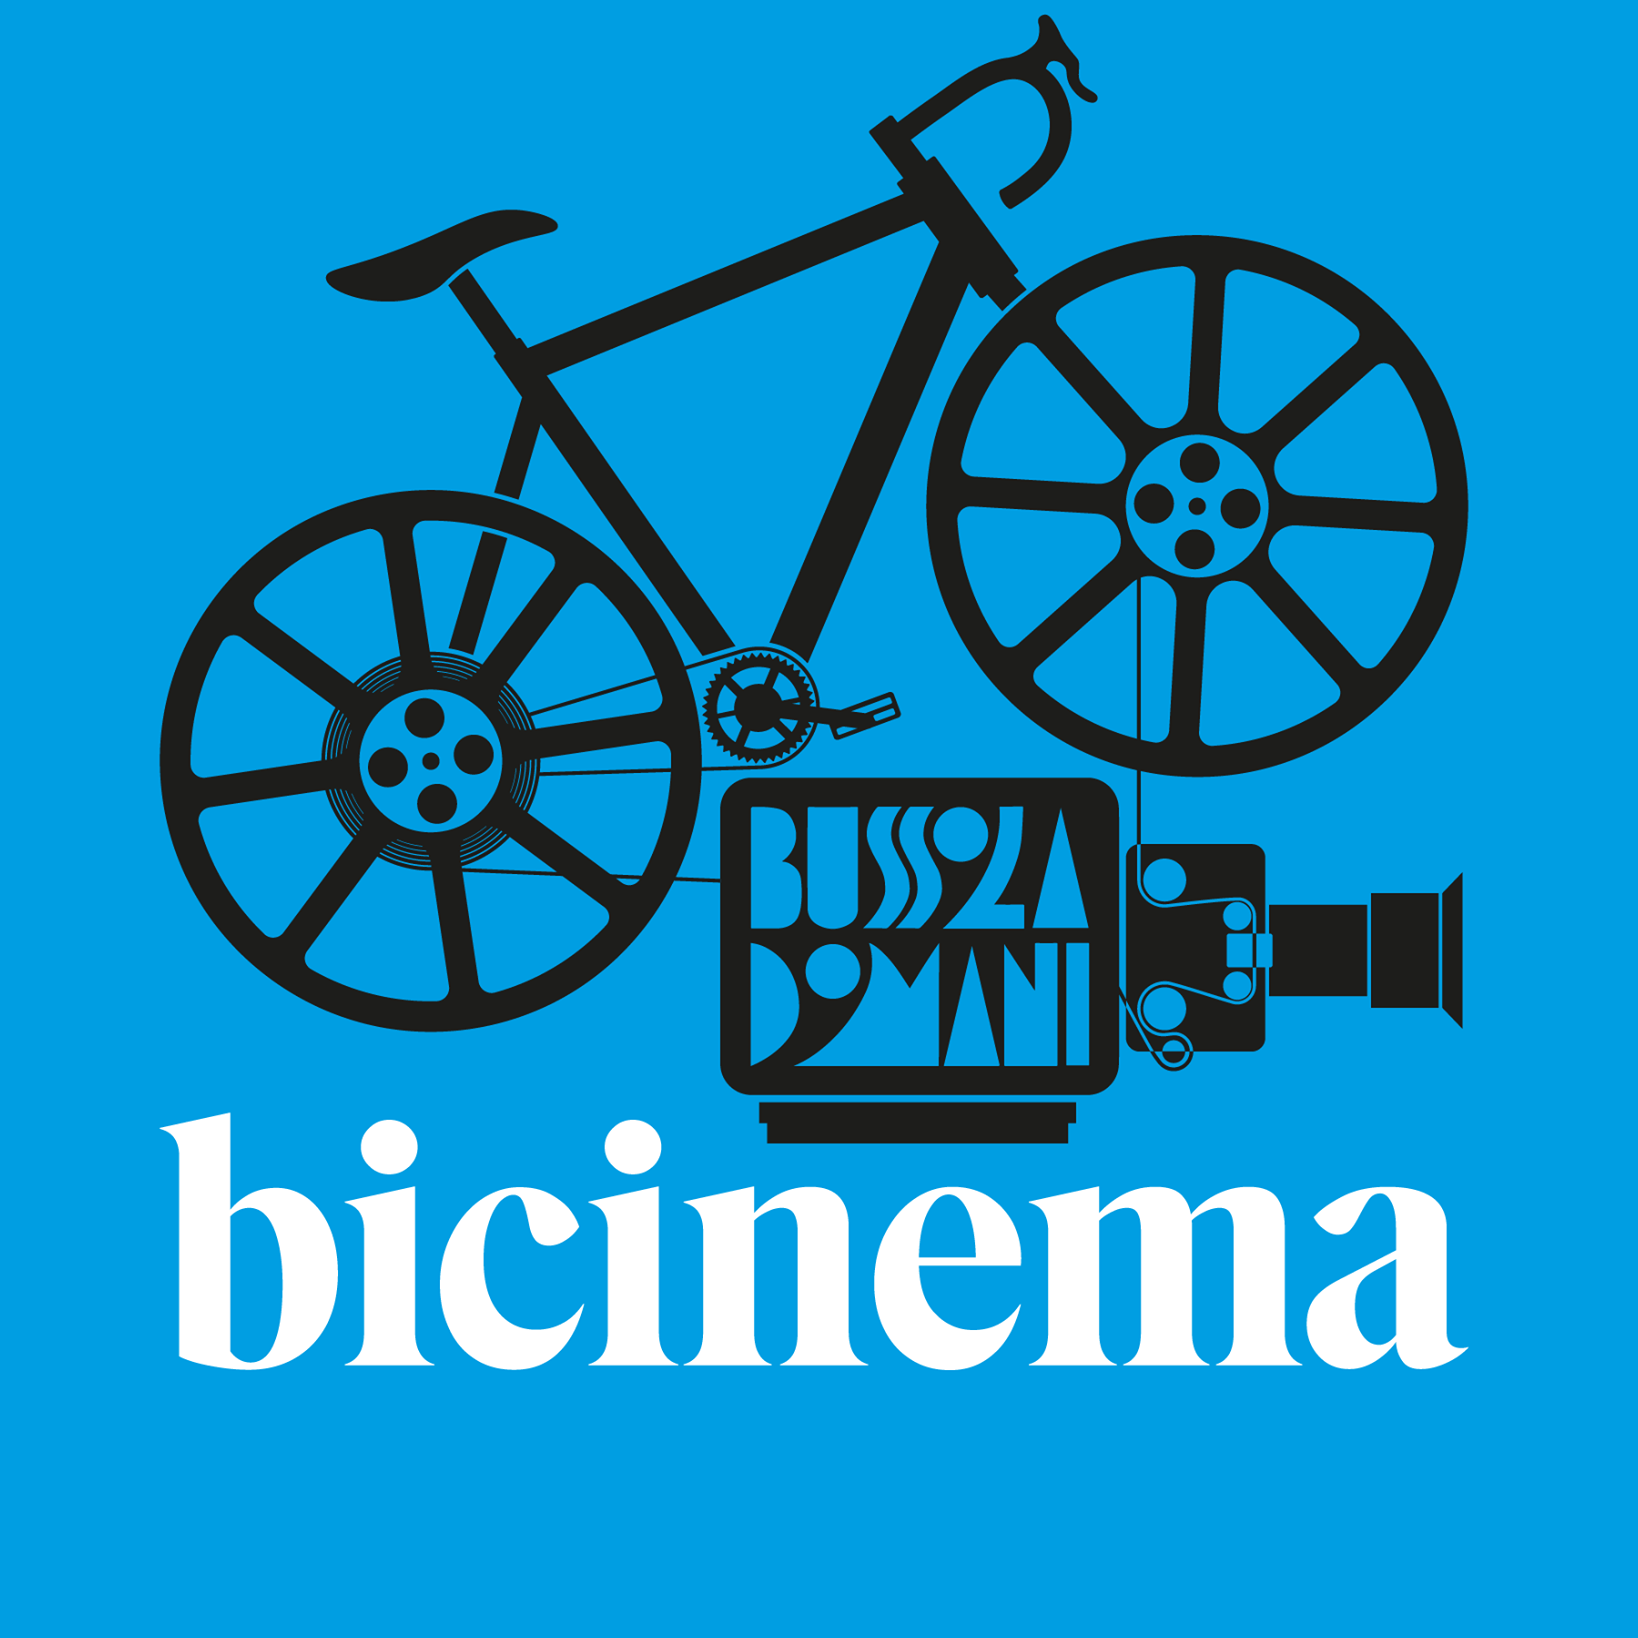 BICINEMA torna Bussola Domani a Lido di Camaiore